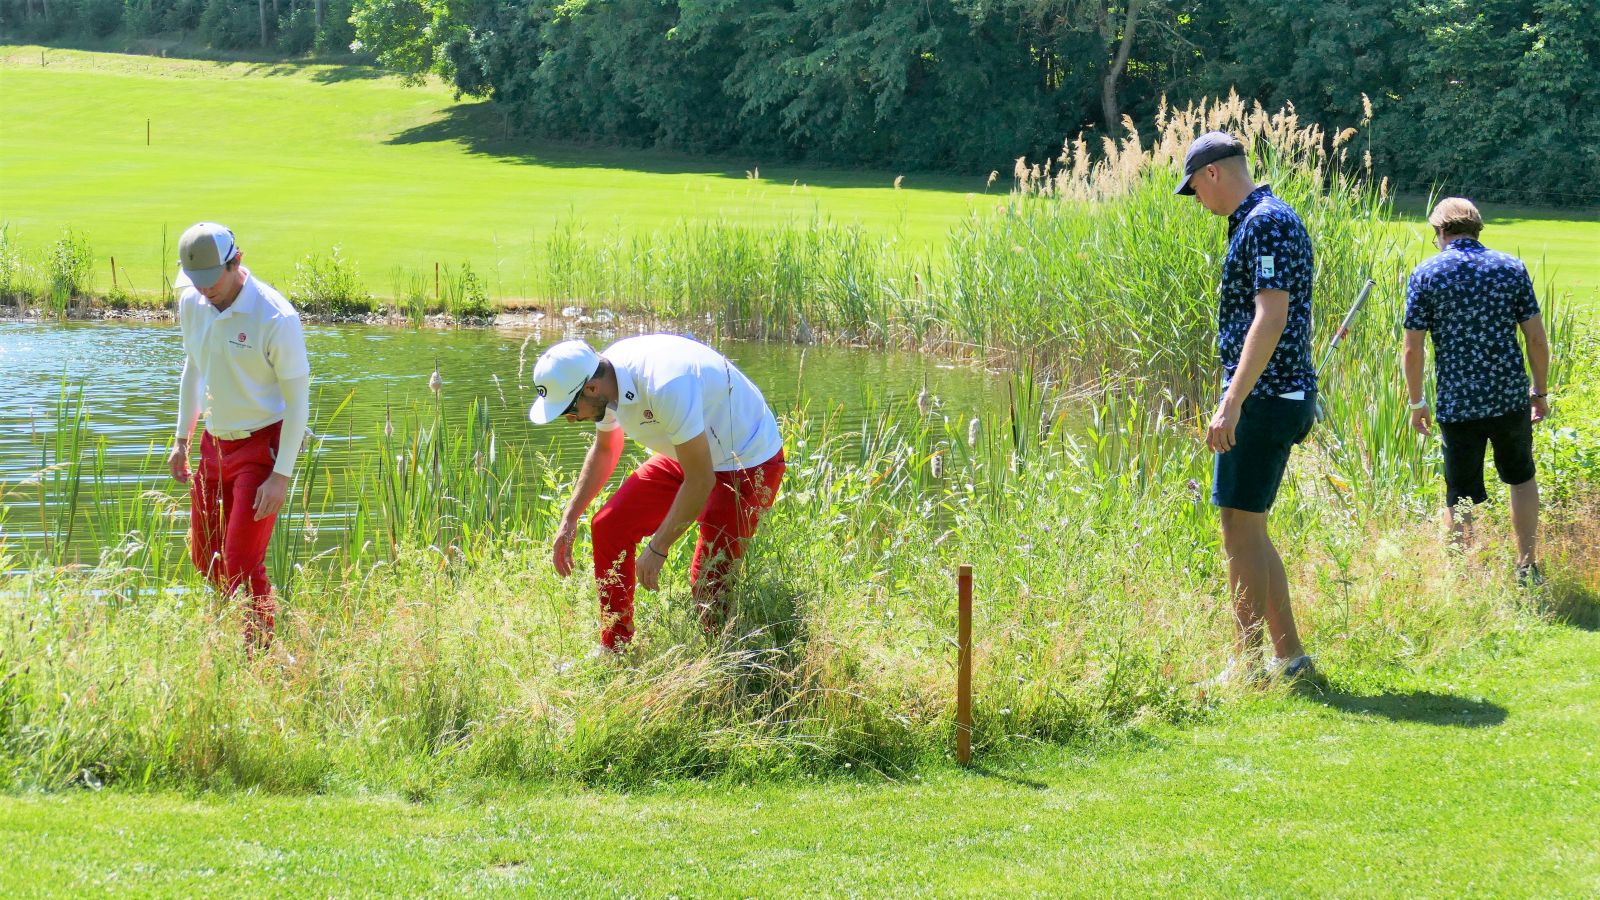 Golfball-Suche im hohen Gras: In langen Hosen ist man besser vor Zecken geschützt als in kurzen. © Kirmaier